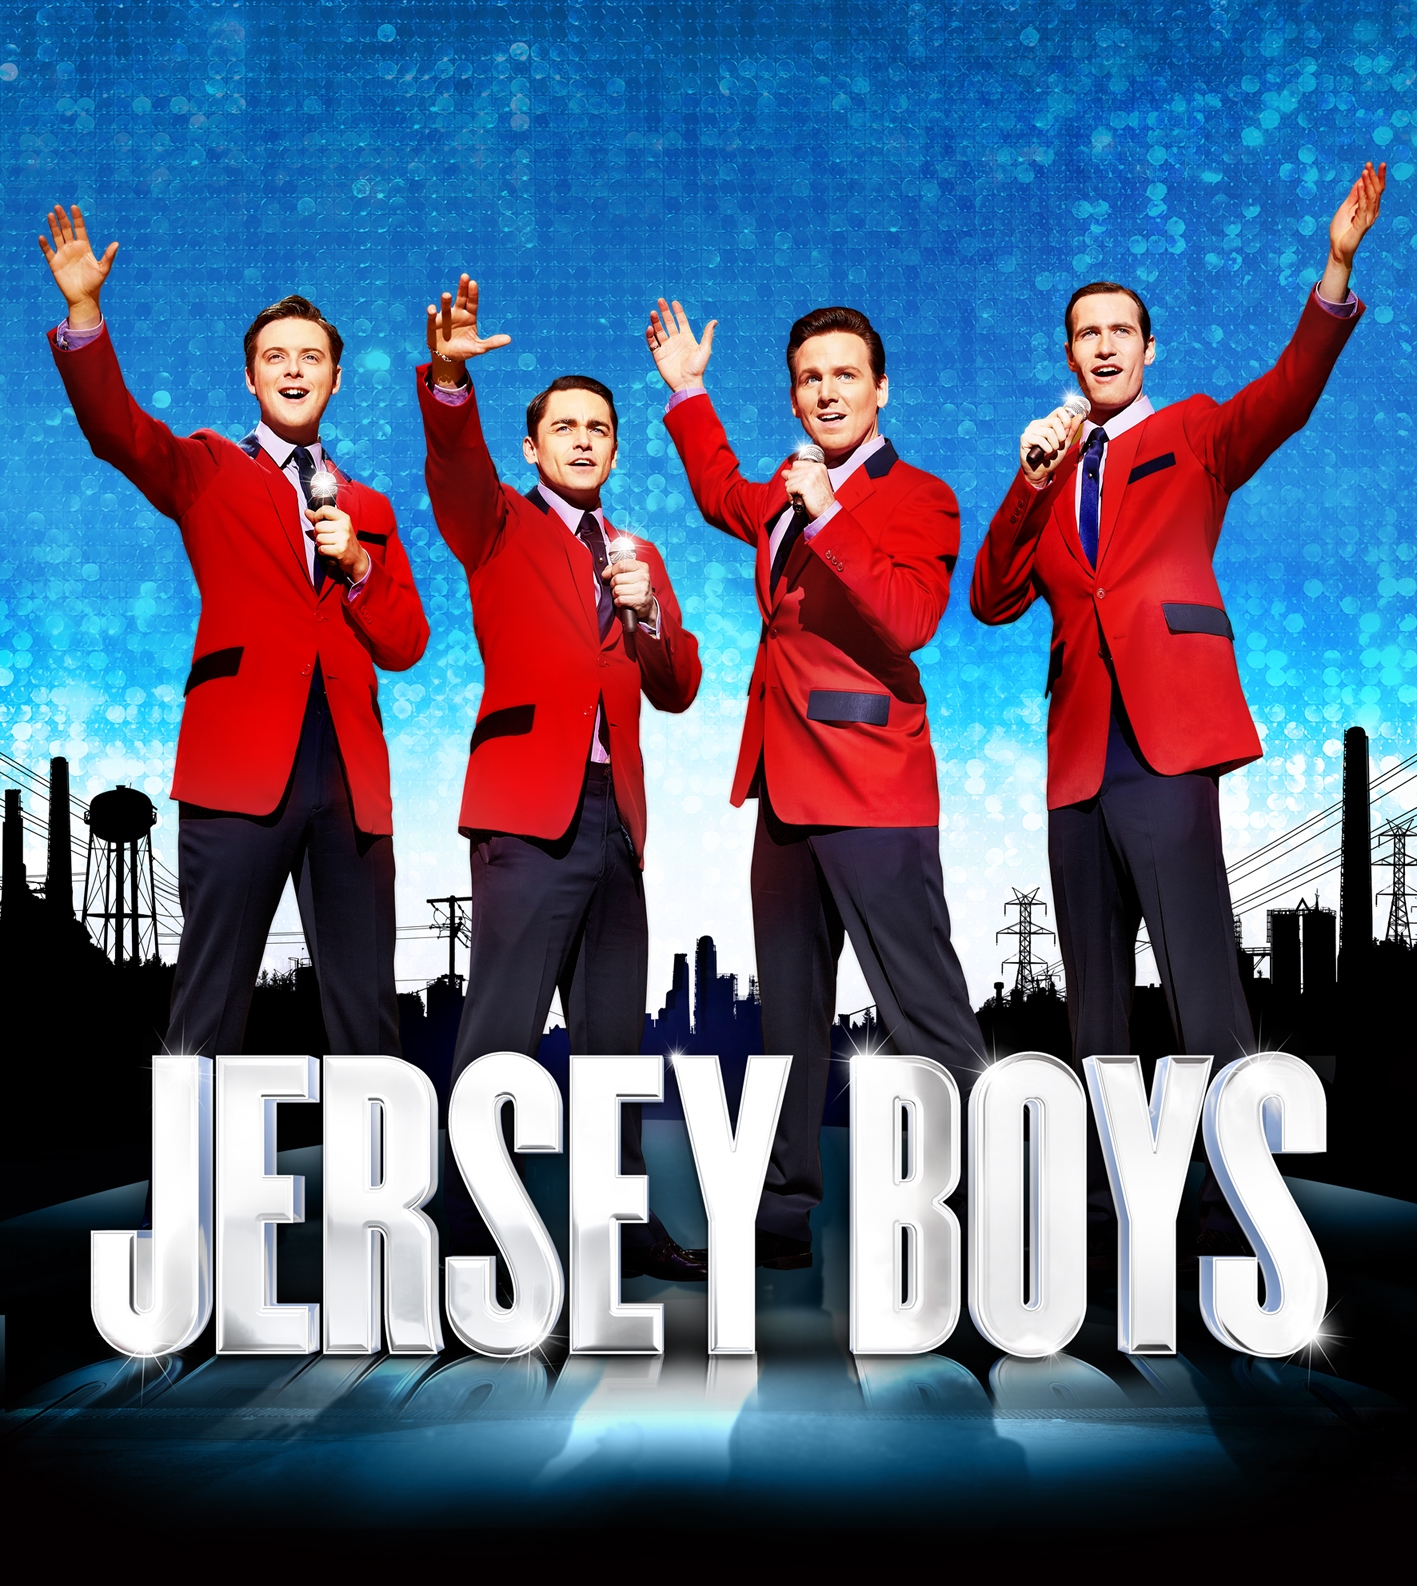 Jersey Boys Backgrounds, Compatible - PC, Mobile, Gadgets| 1417x1586 px